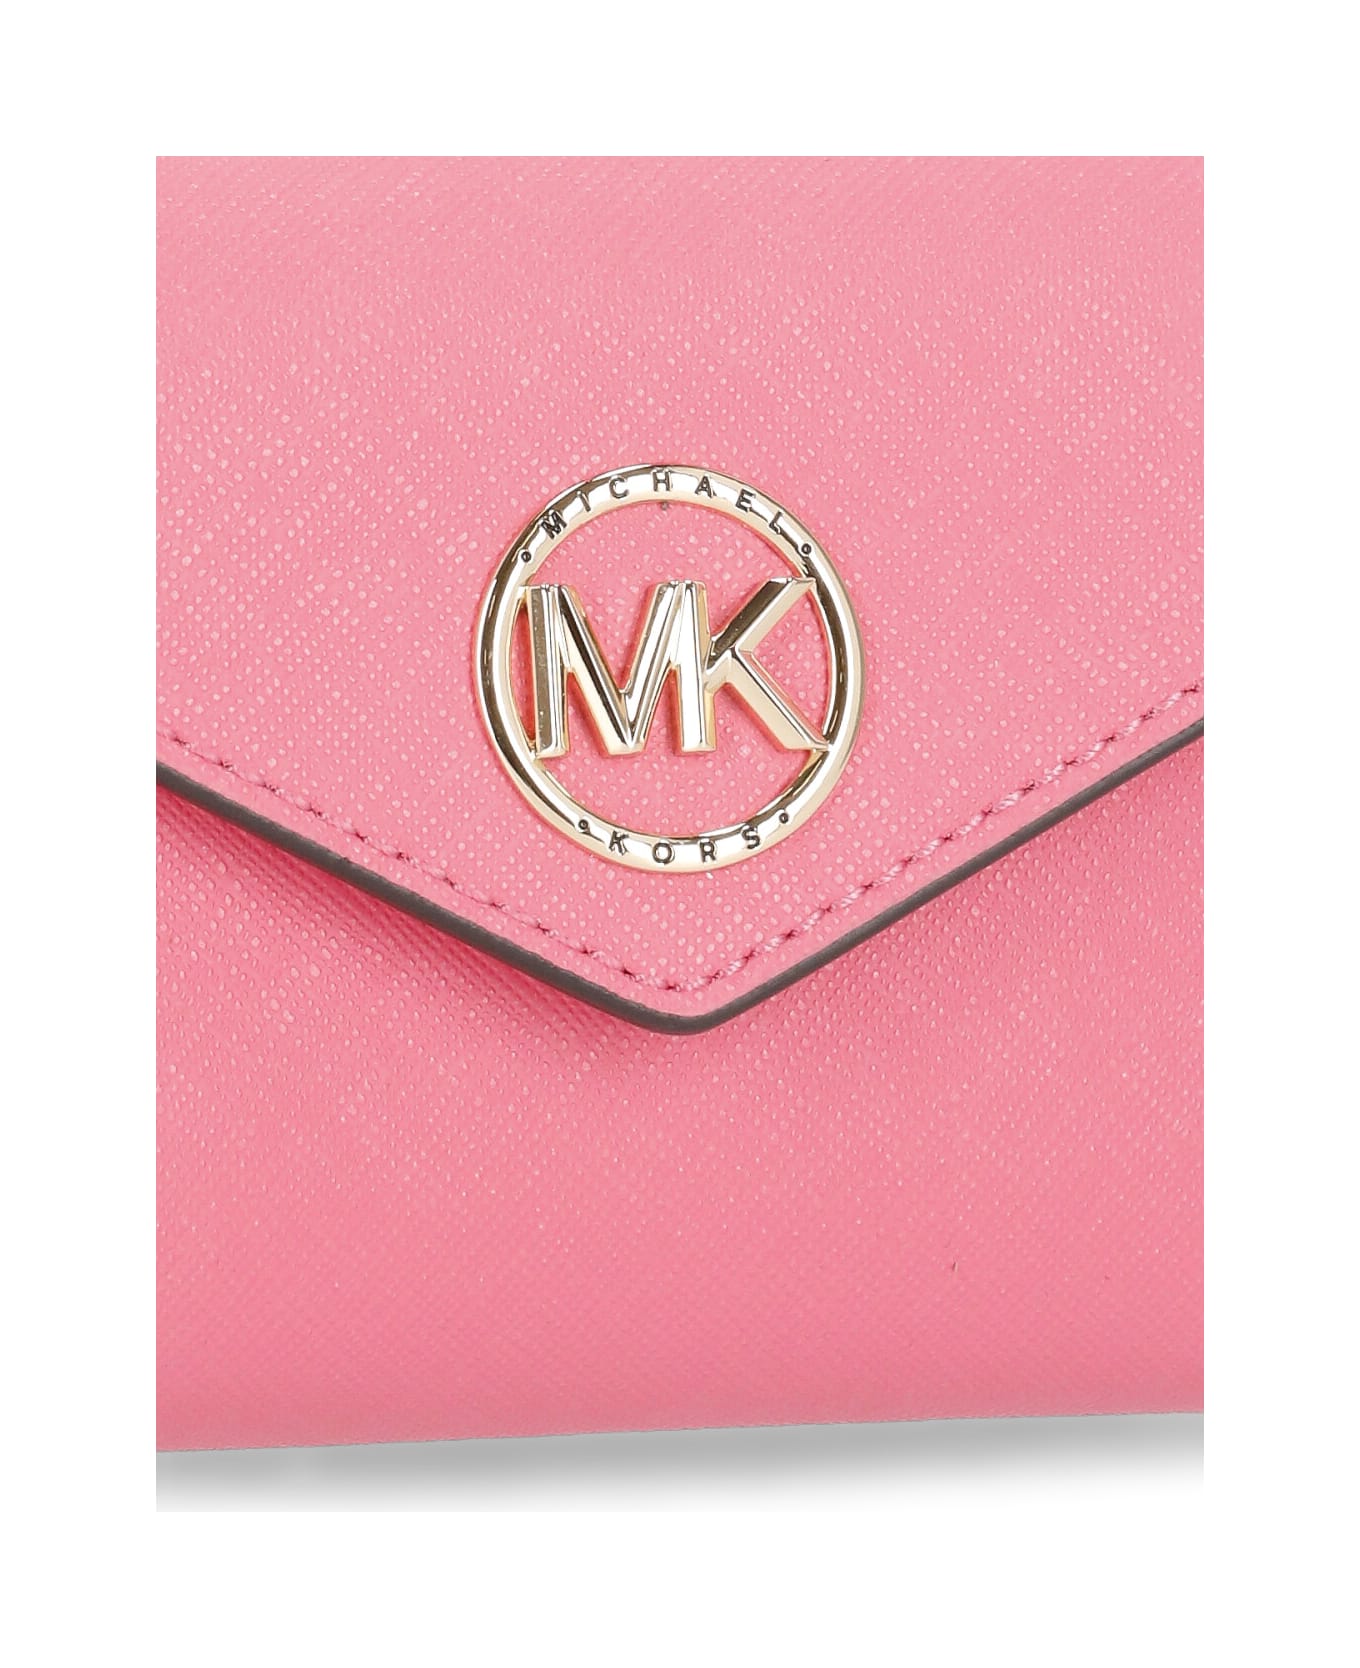 MICHAEL Michael Kors Greenwich Wallet - Pink